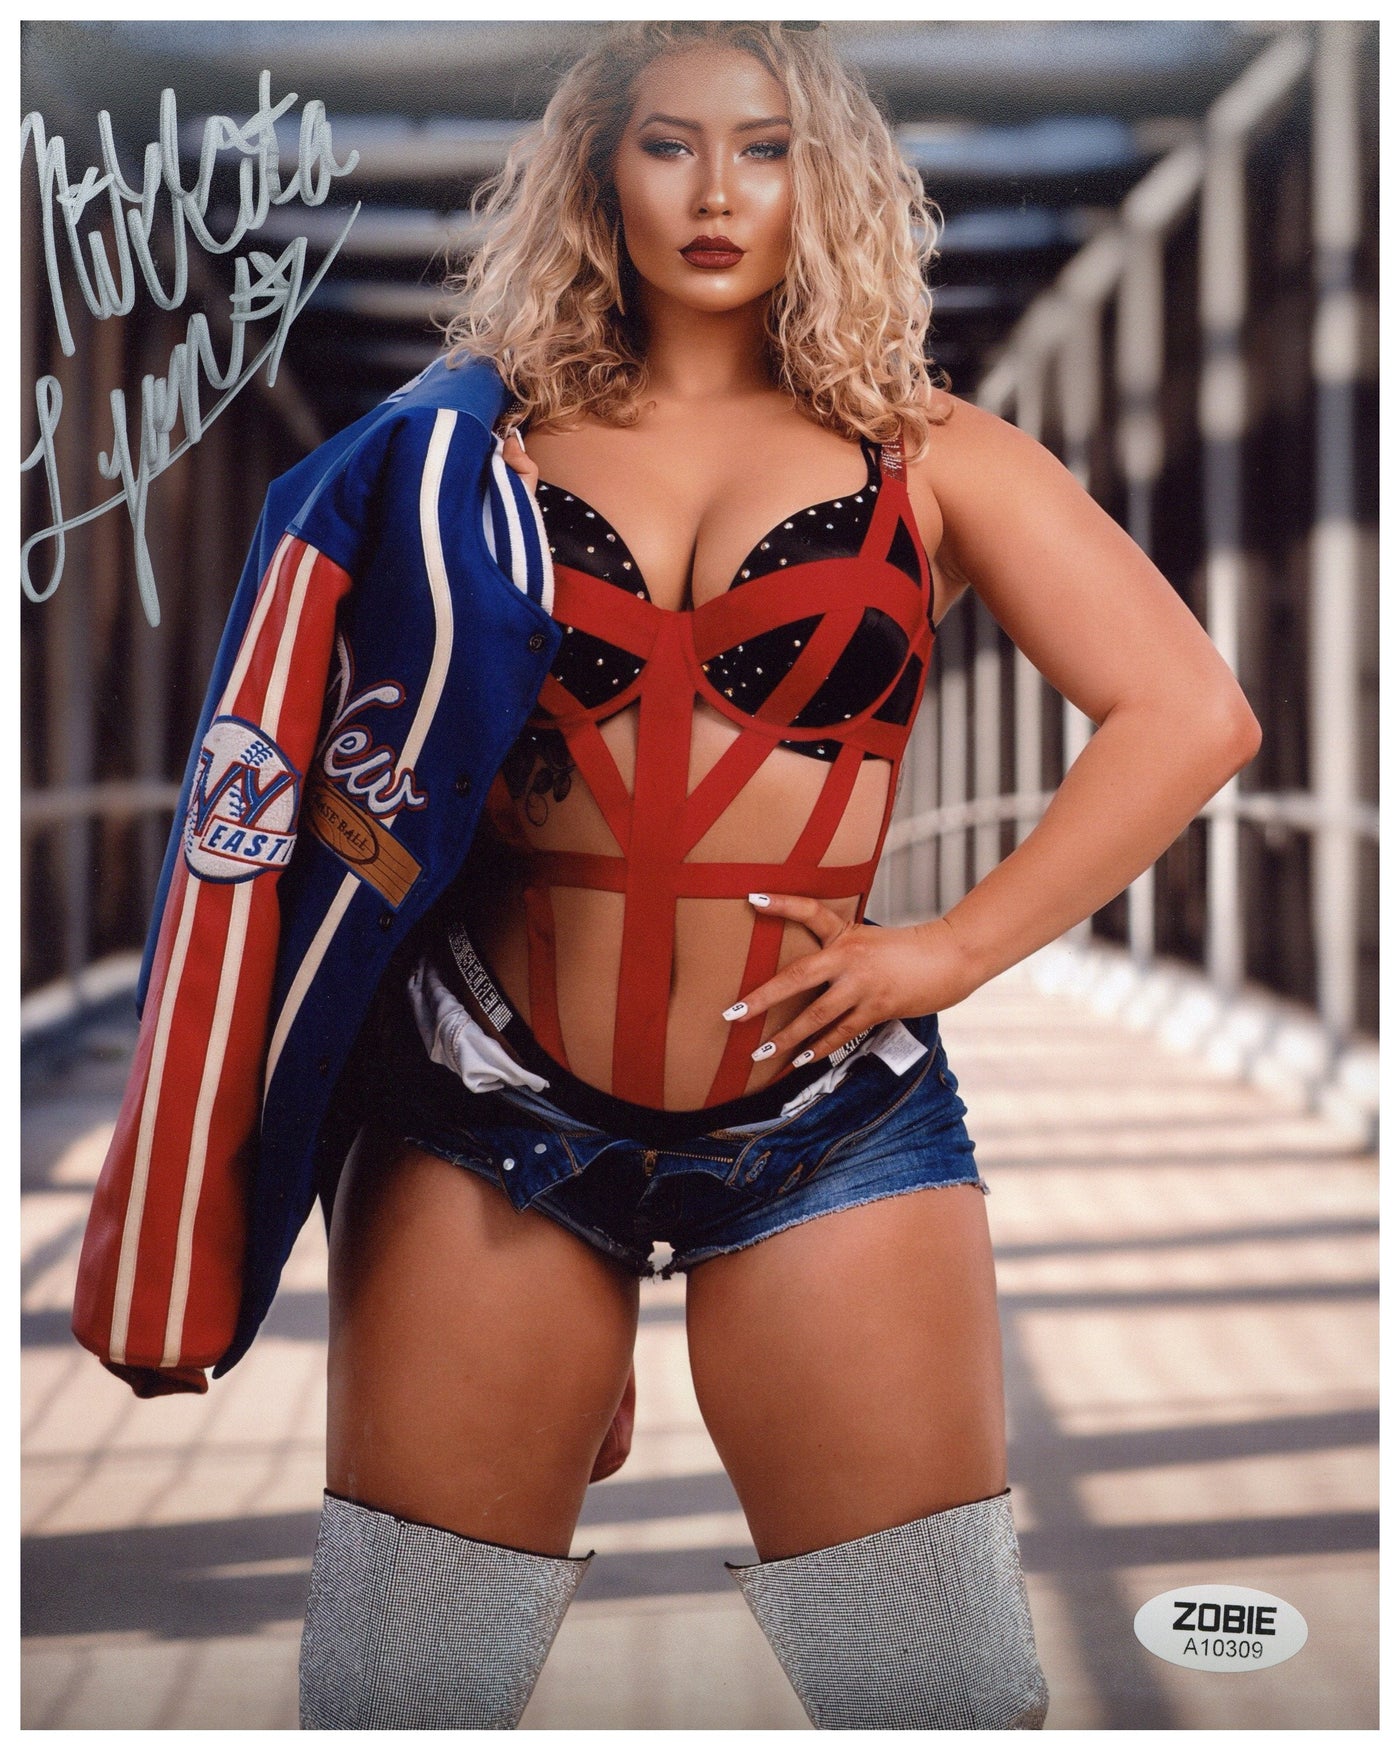 Nikkita Lyons Signed 8x10 Photo NXT WWE Autographed Zobie COA #4